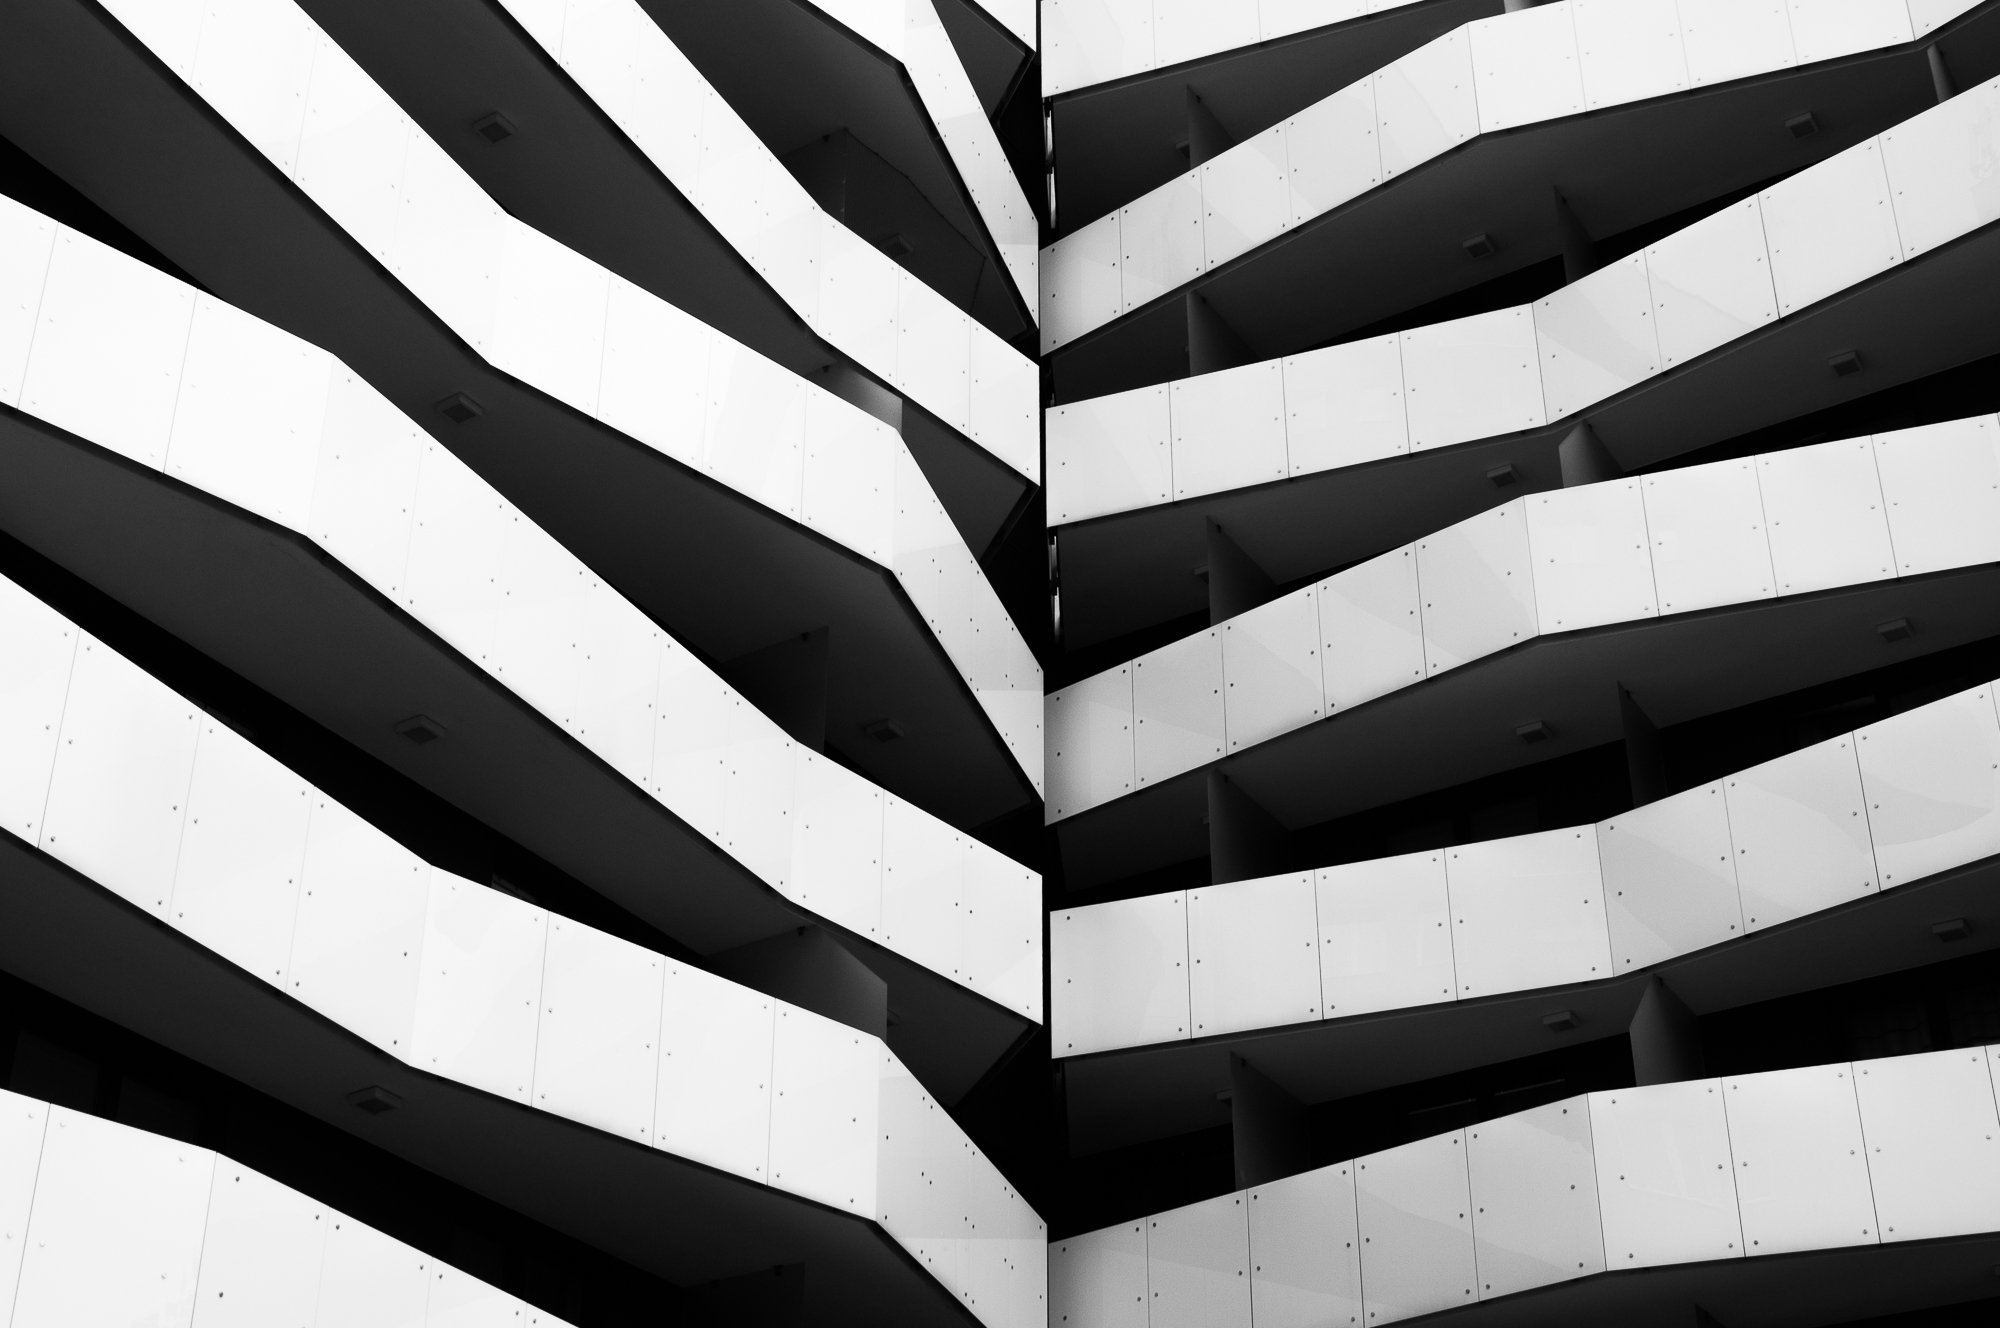 Adam Mazek Photography Warsaw (Warszawa) 2019. Post: "Naming of photographs." Title: "Vertigo." Abstraction. Minimalism. Architecture.